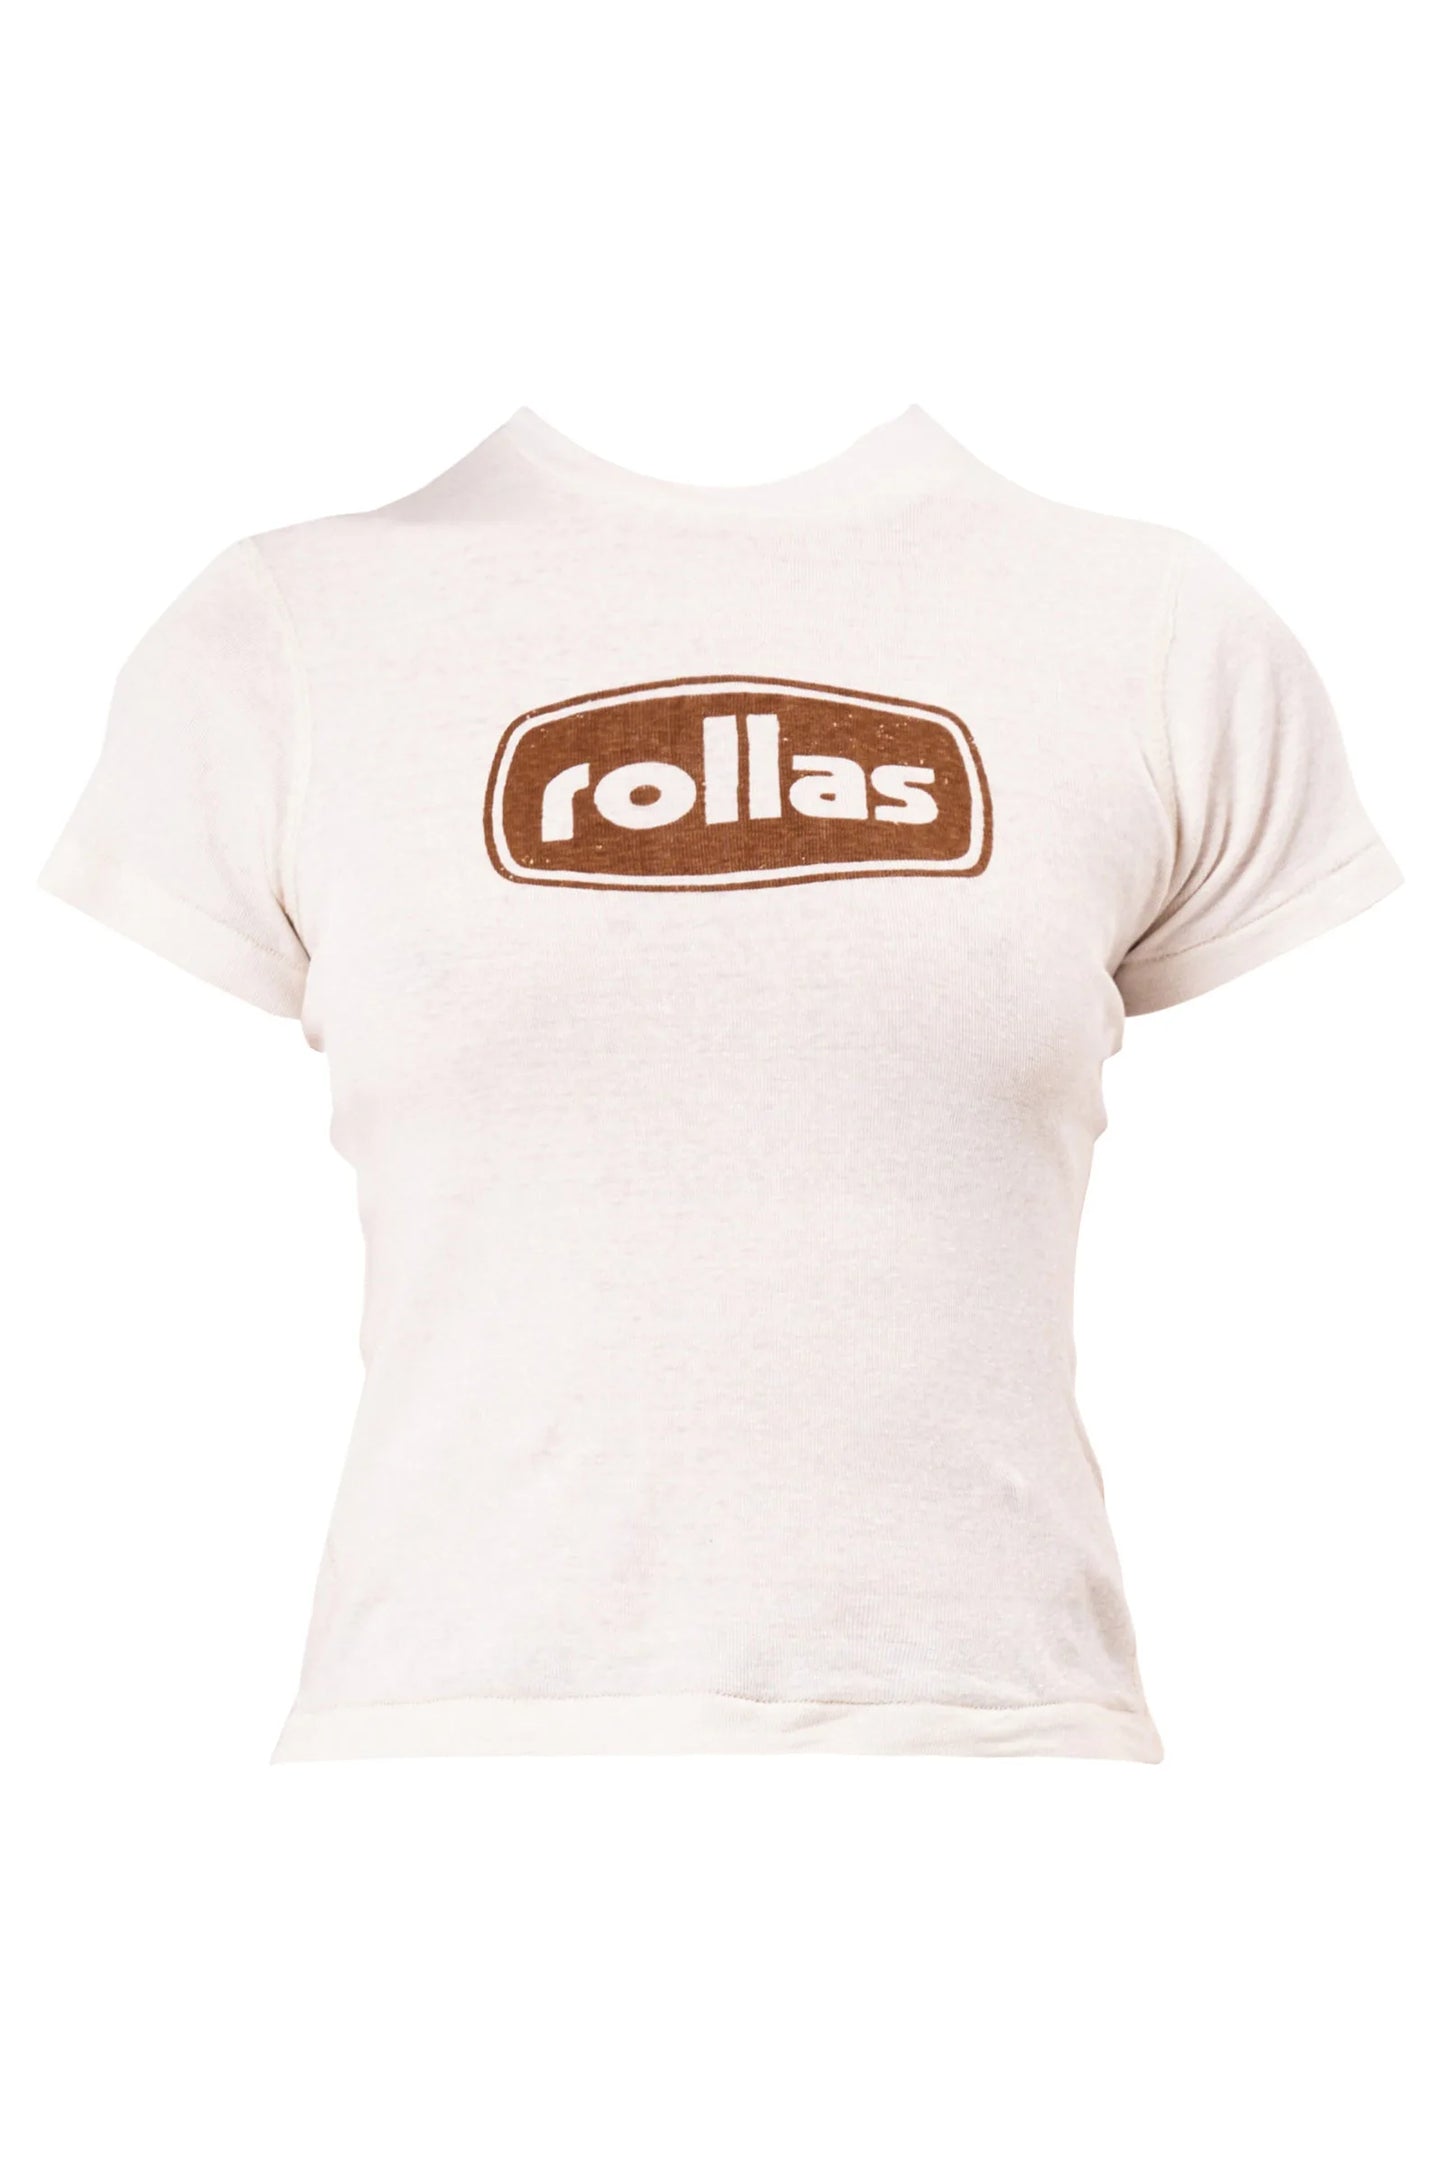 ROLLA'S - Classic Station Tee - Cream